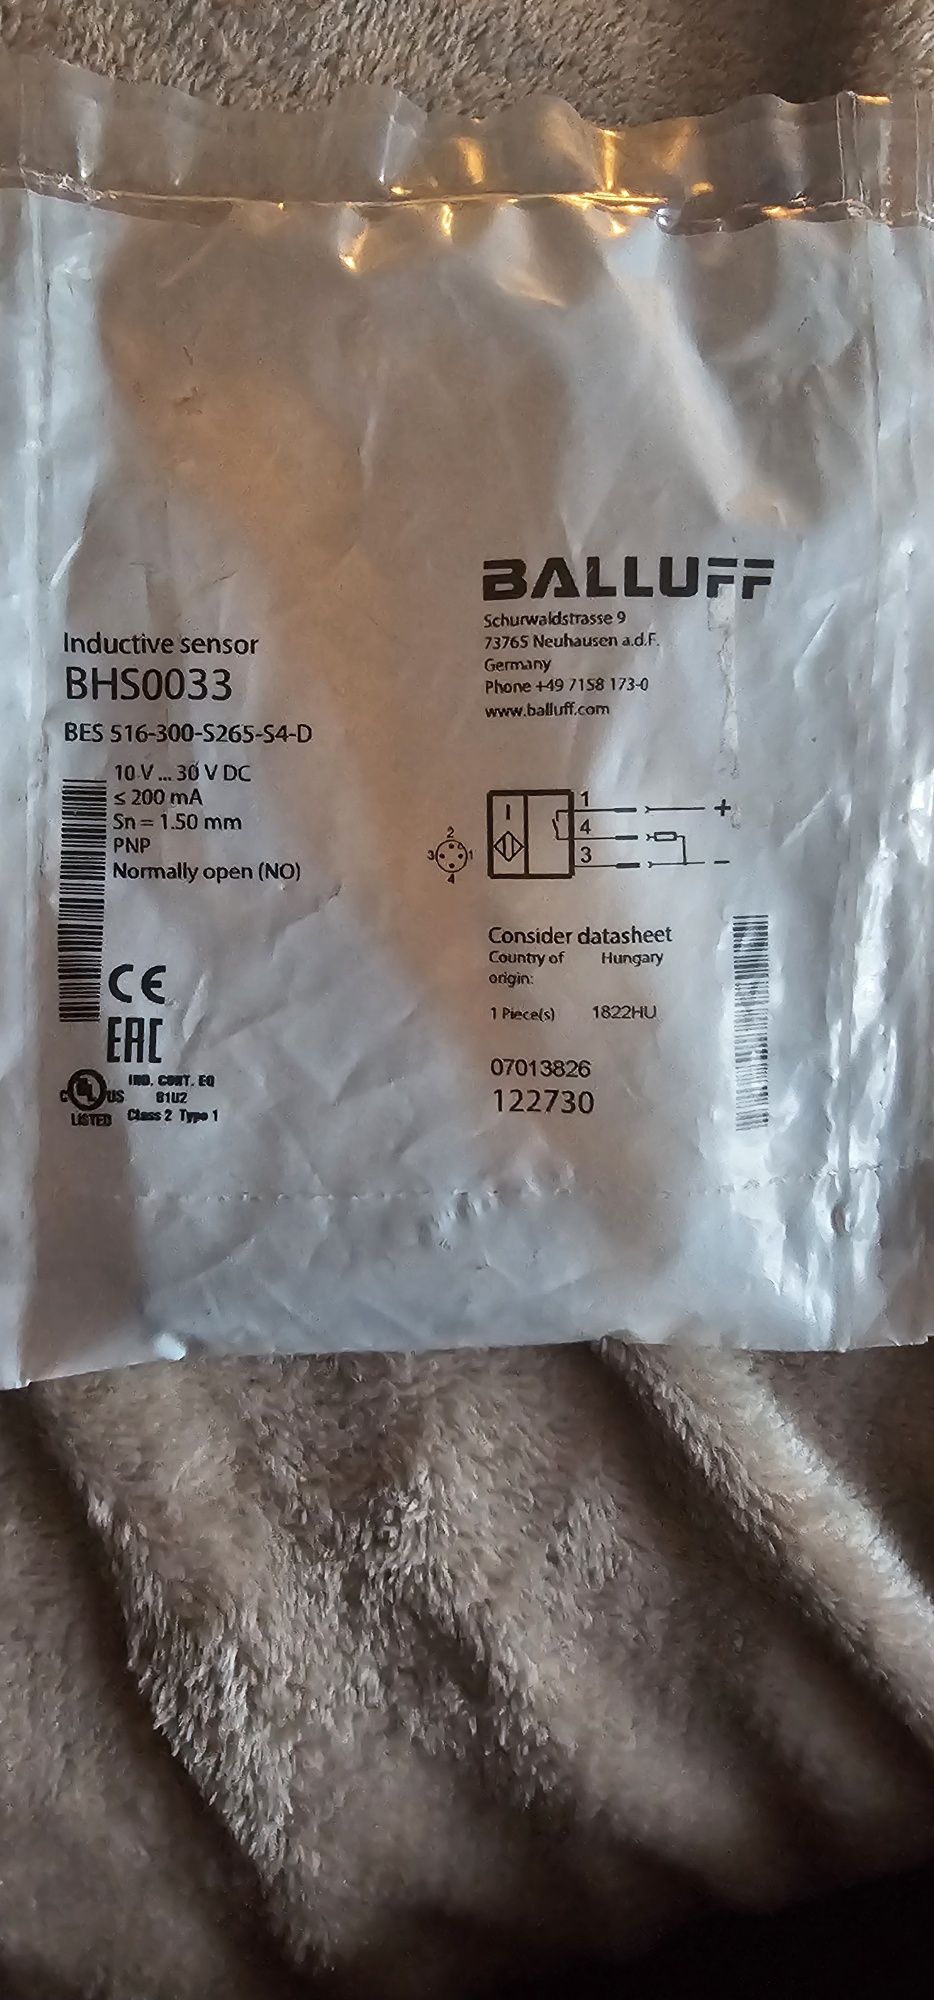 Senzor inductiv Balluff BHS0033